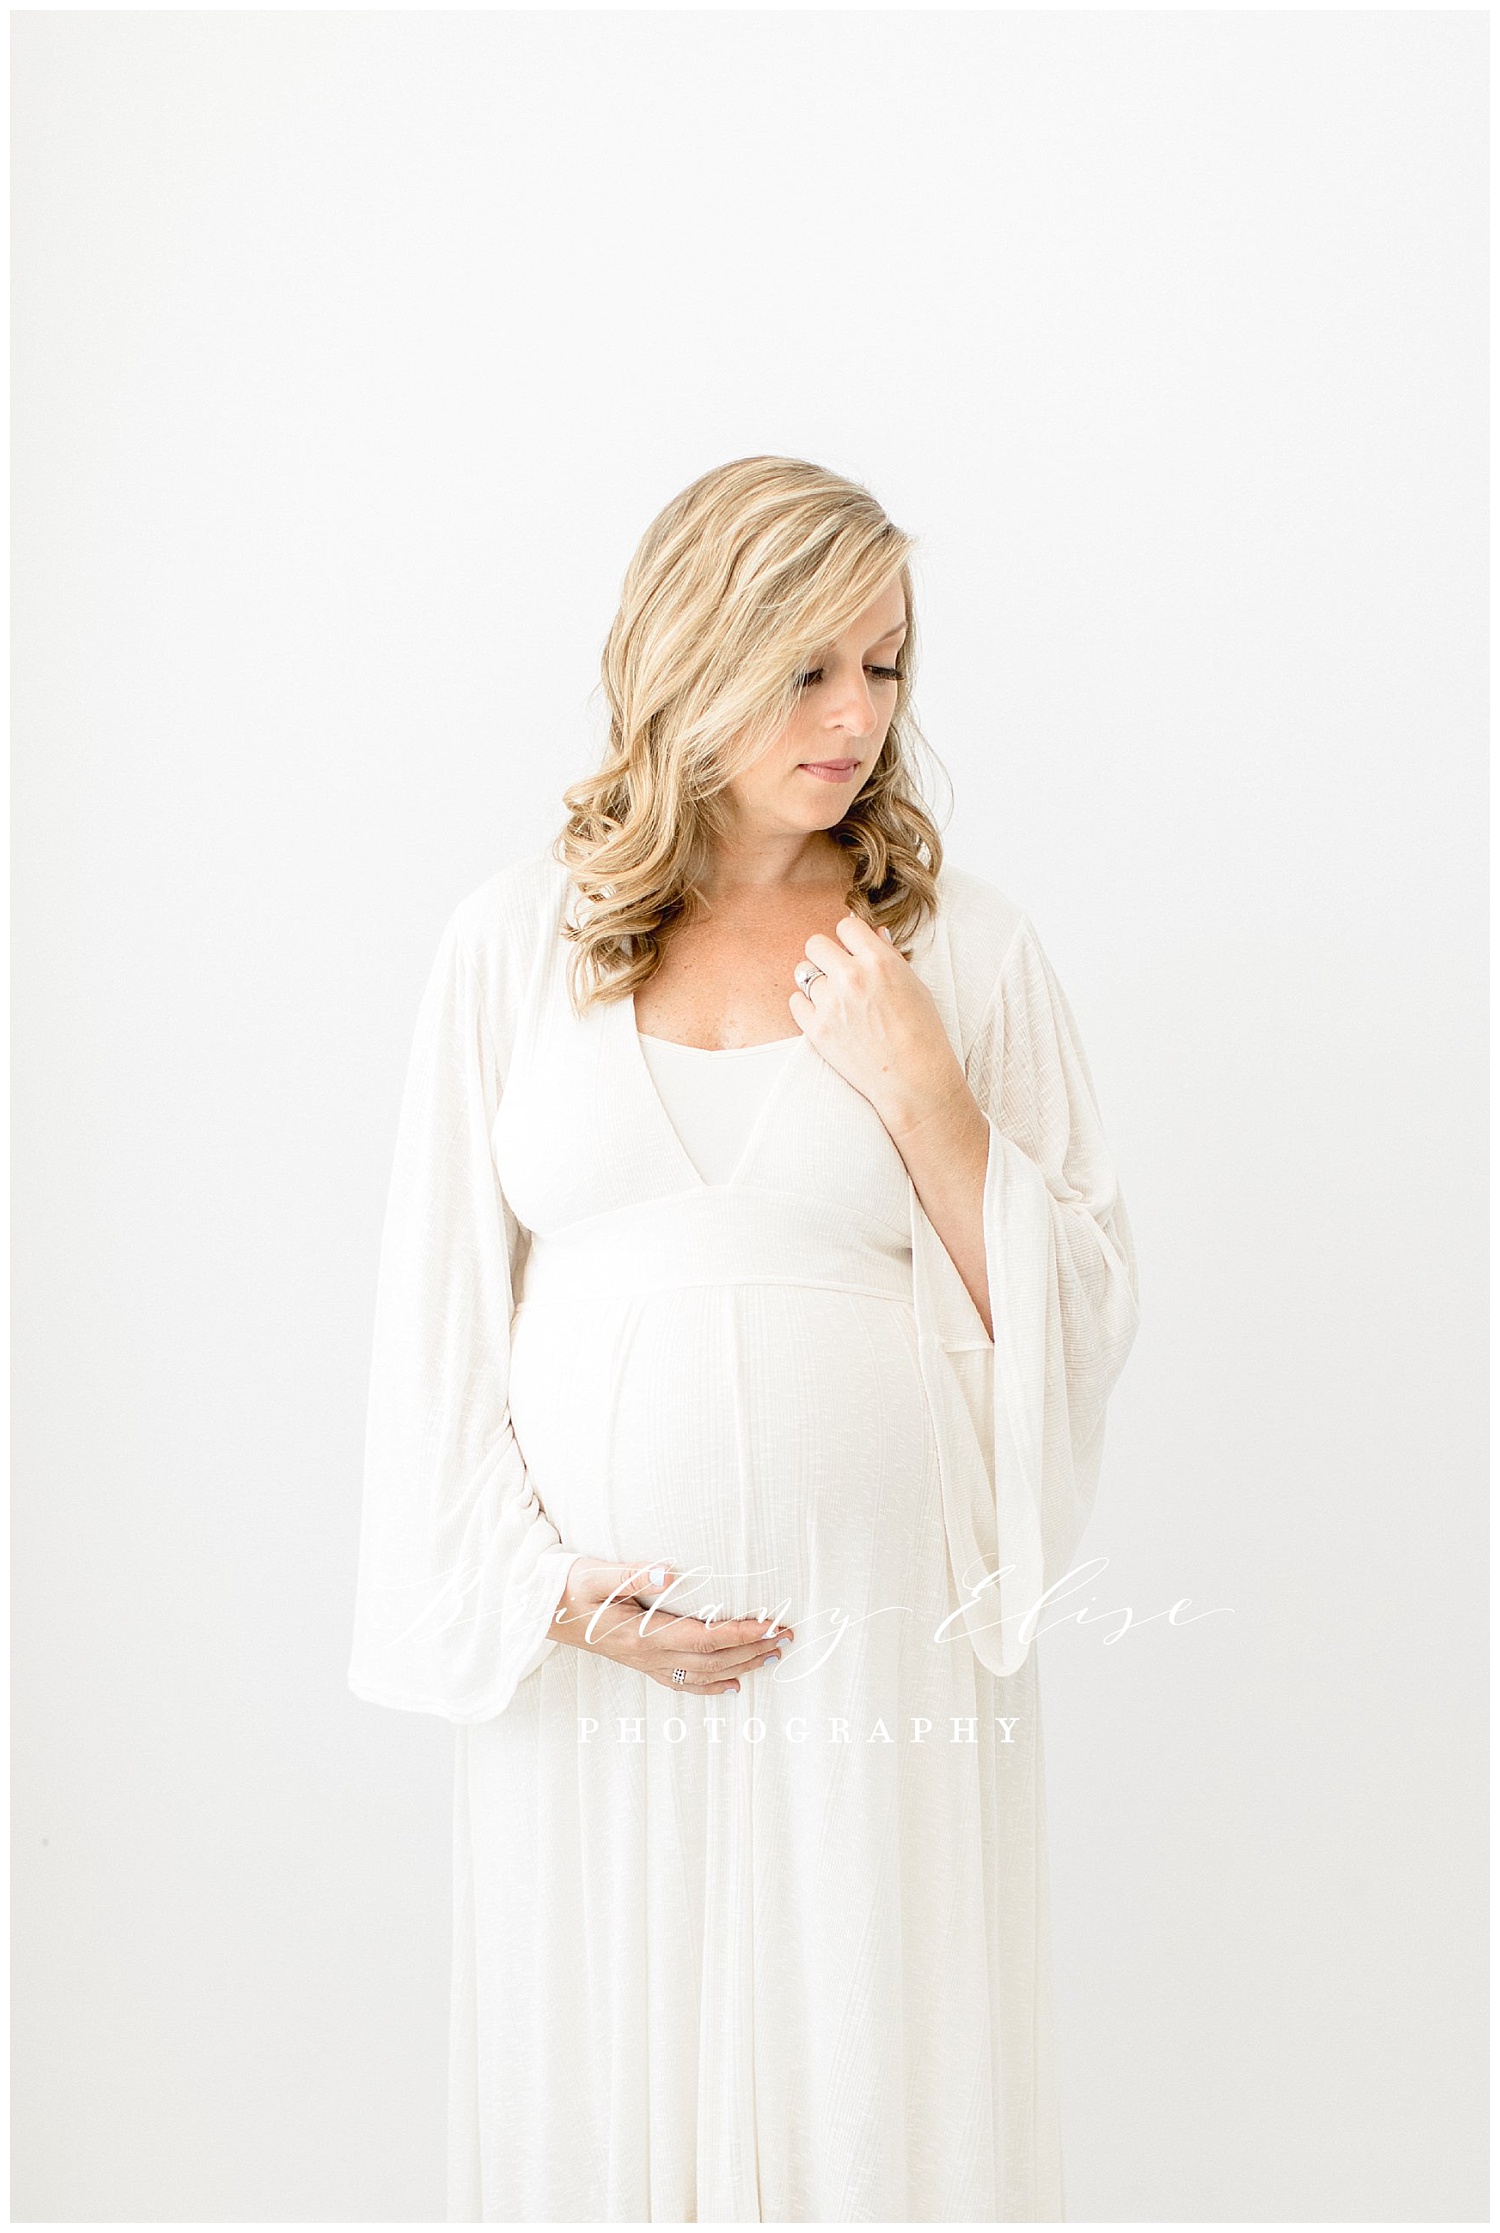 Tampa Maternity Studio Photographer